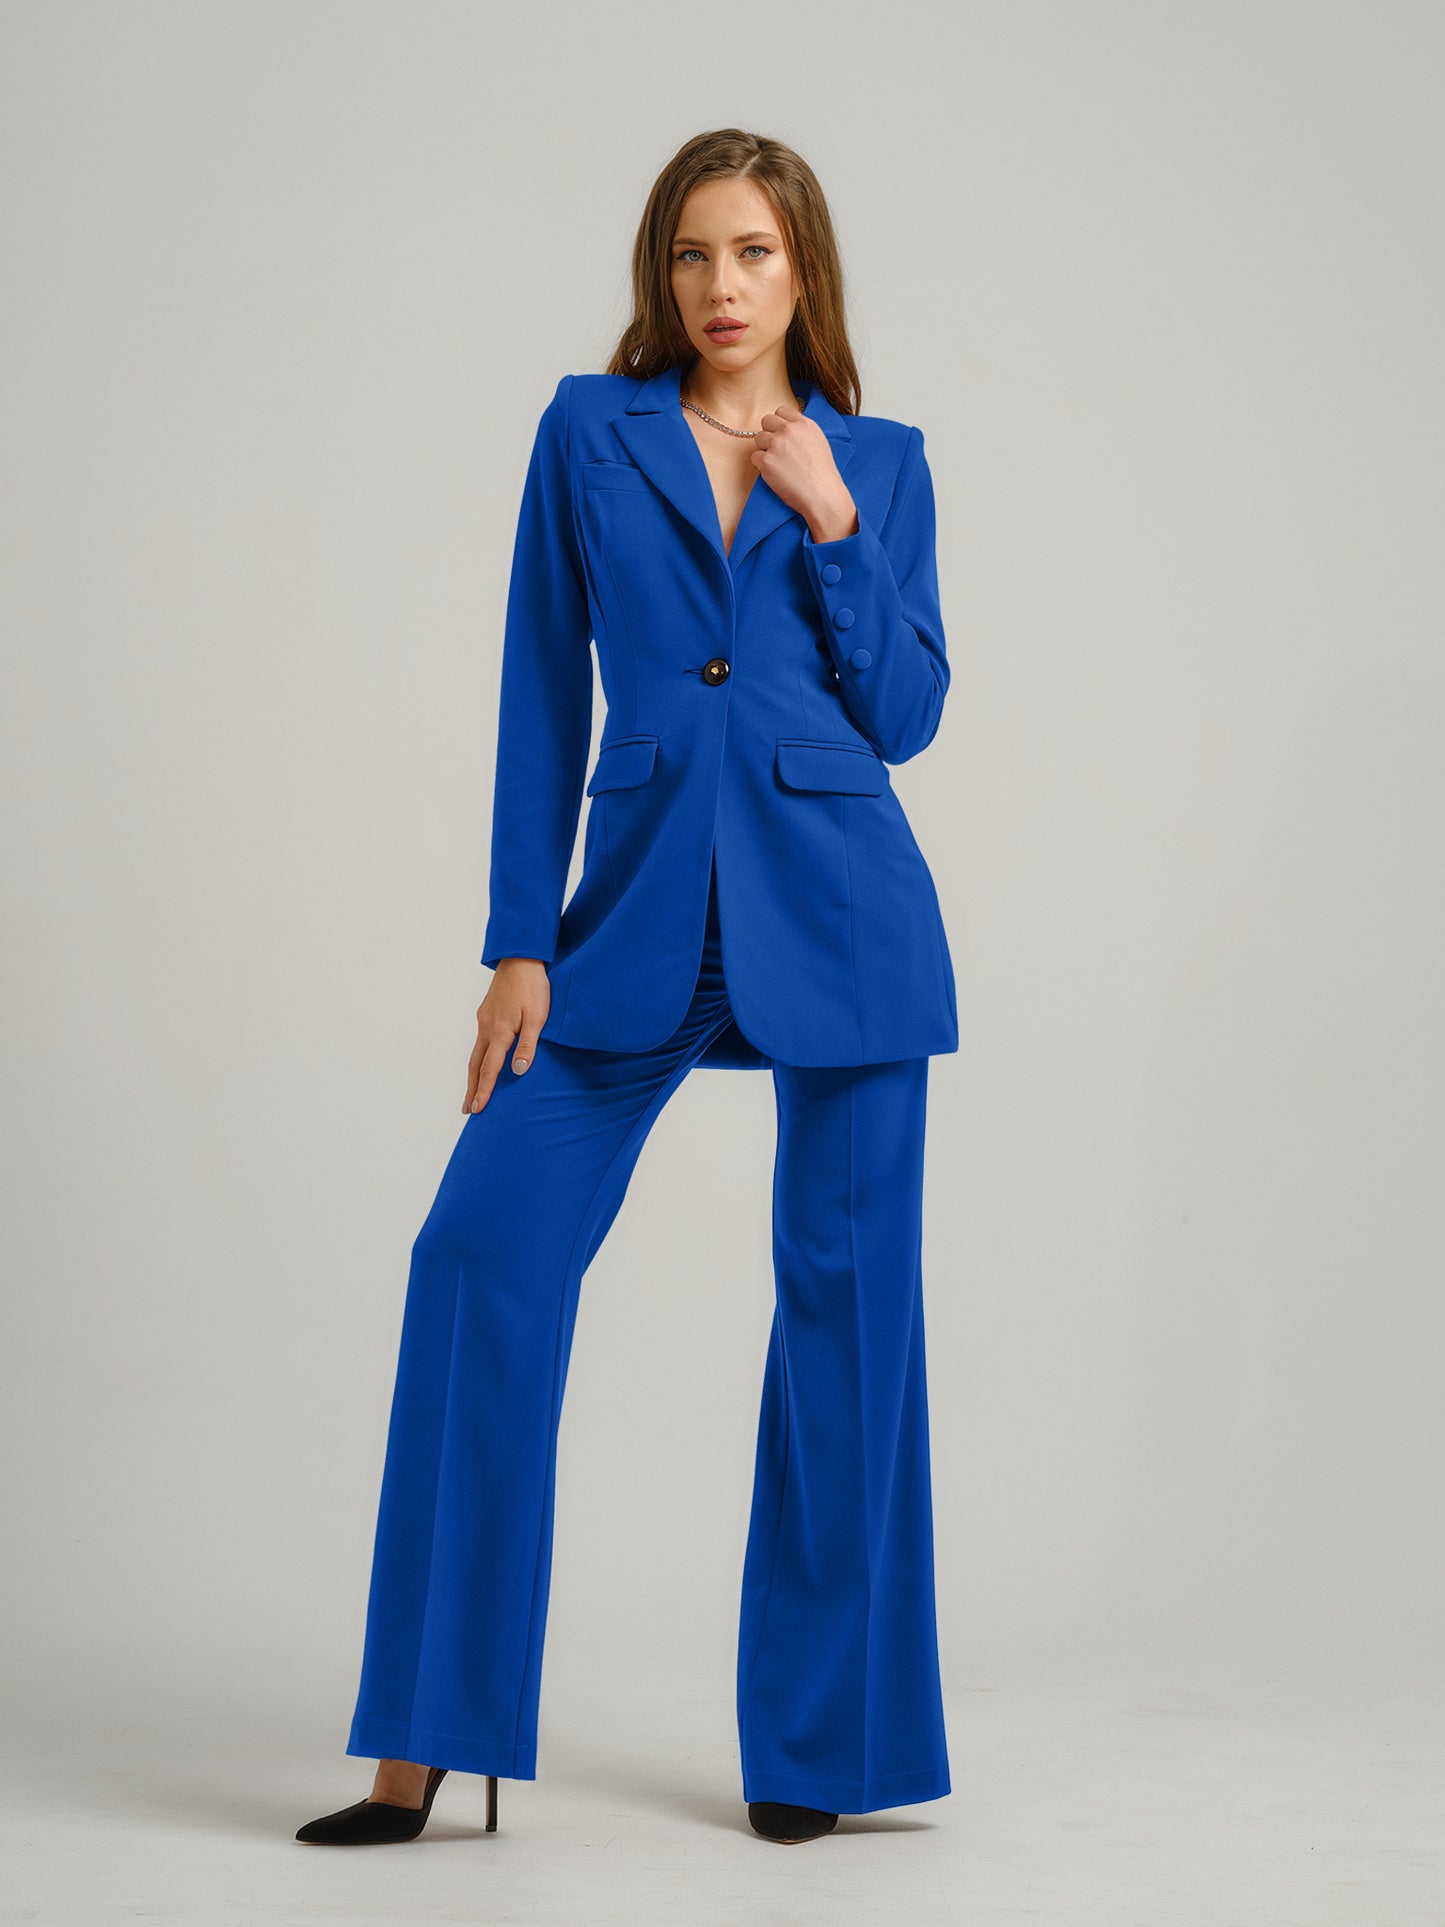 Royal Azure Timeless Power Suit by Tia Dorraine Women's Luxury Fashion Designer Clothing Brand